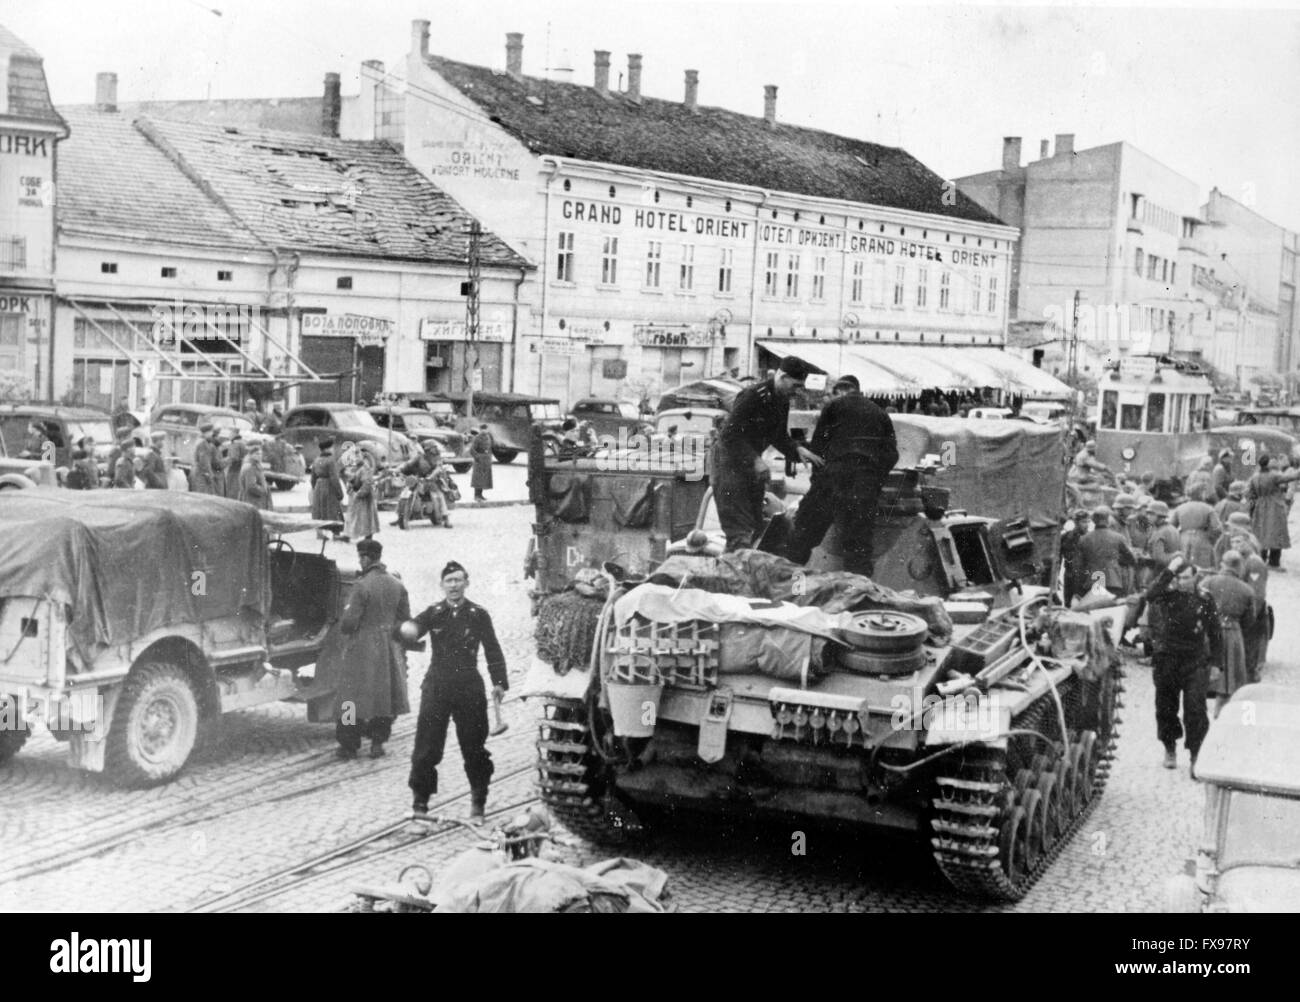 The Nazi propaganda image depicts soldiers of the German Wehrmacht on advance in Nis, Yugoslavia, April 1941. Fotoarchiv für Zeitgeschichtee - NO WIRE SERVICE - Stock Photo